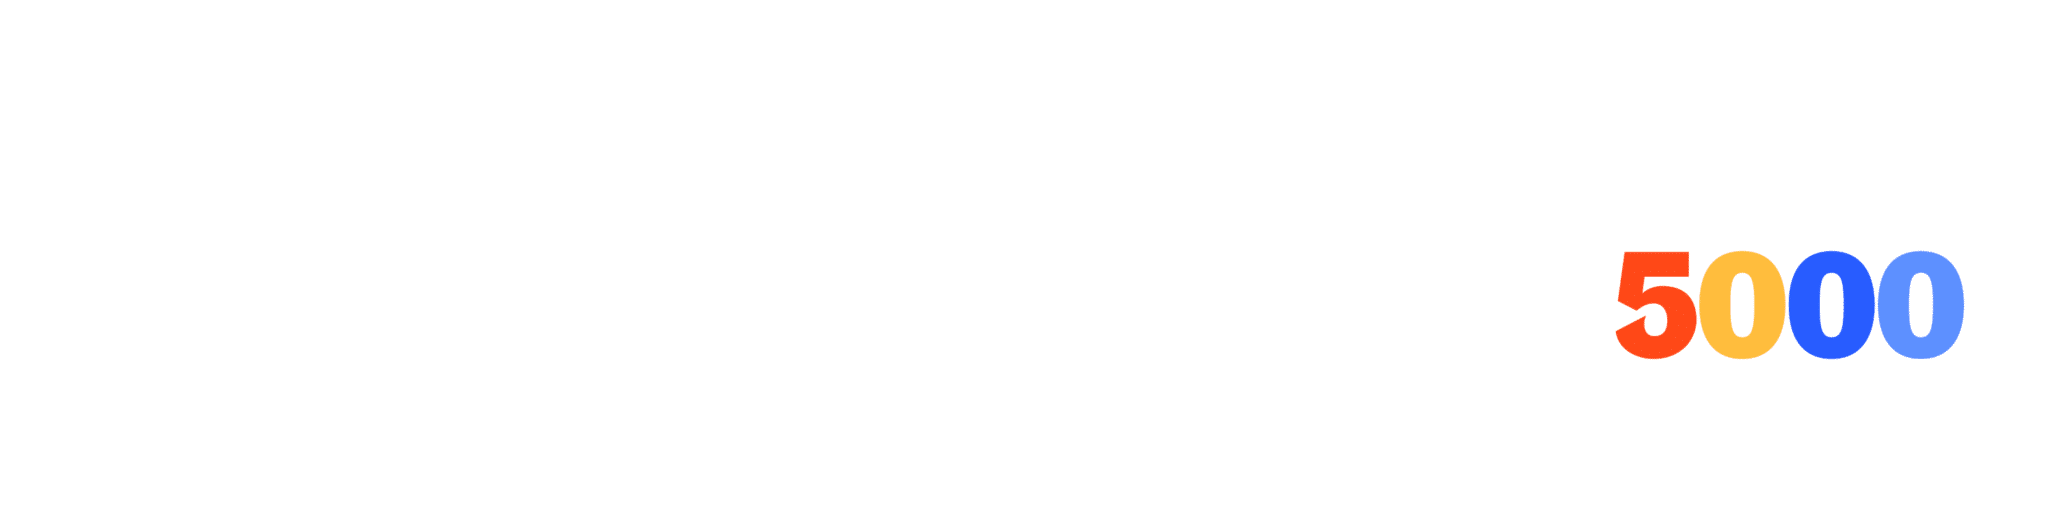 Trackstreet